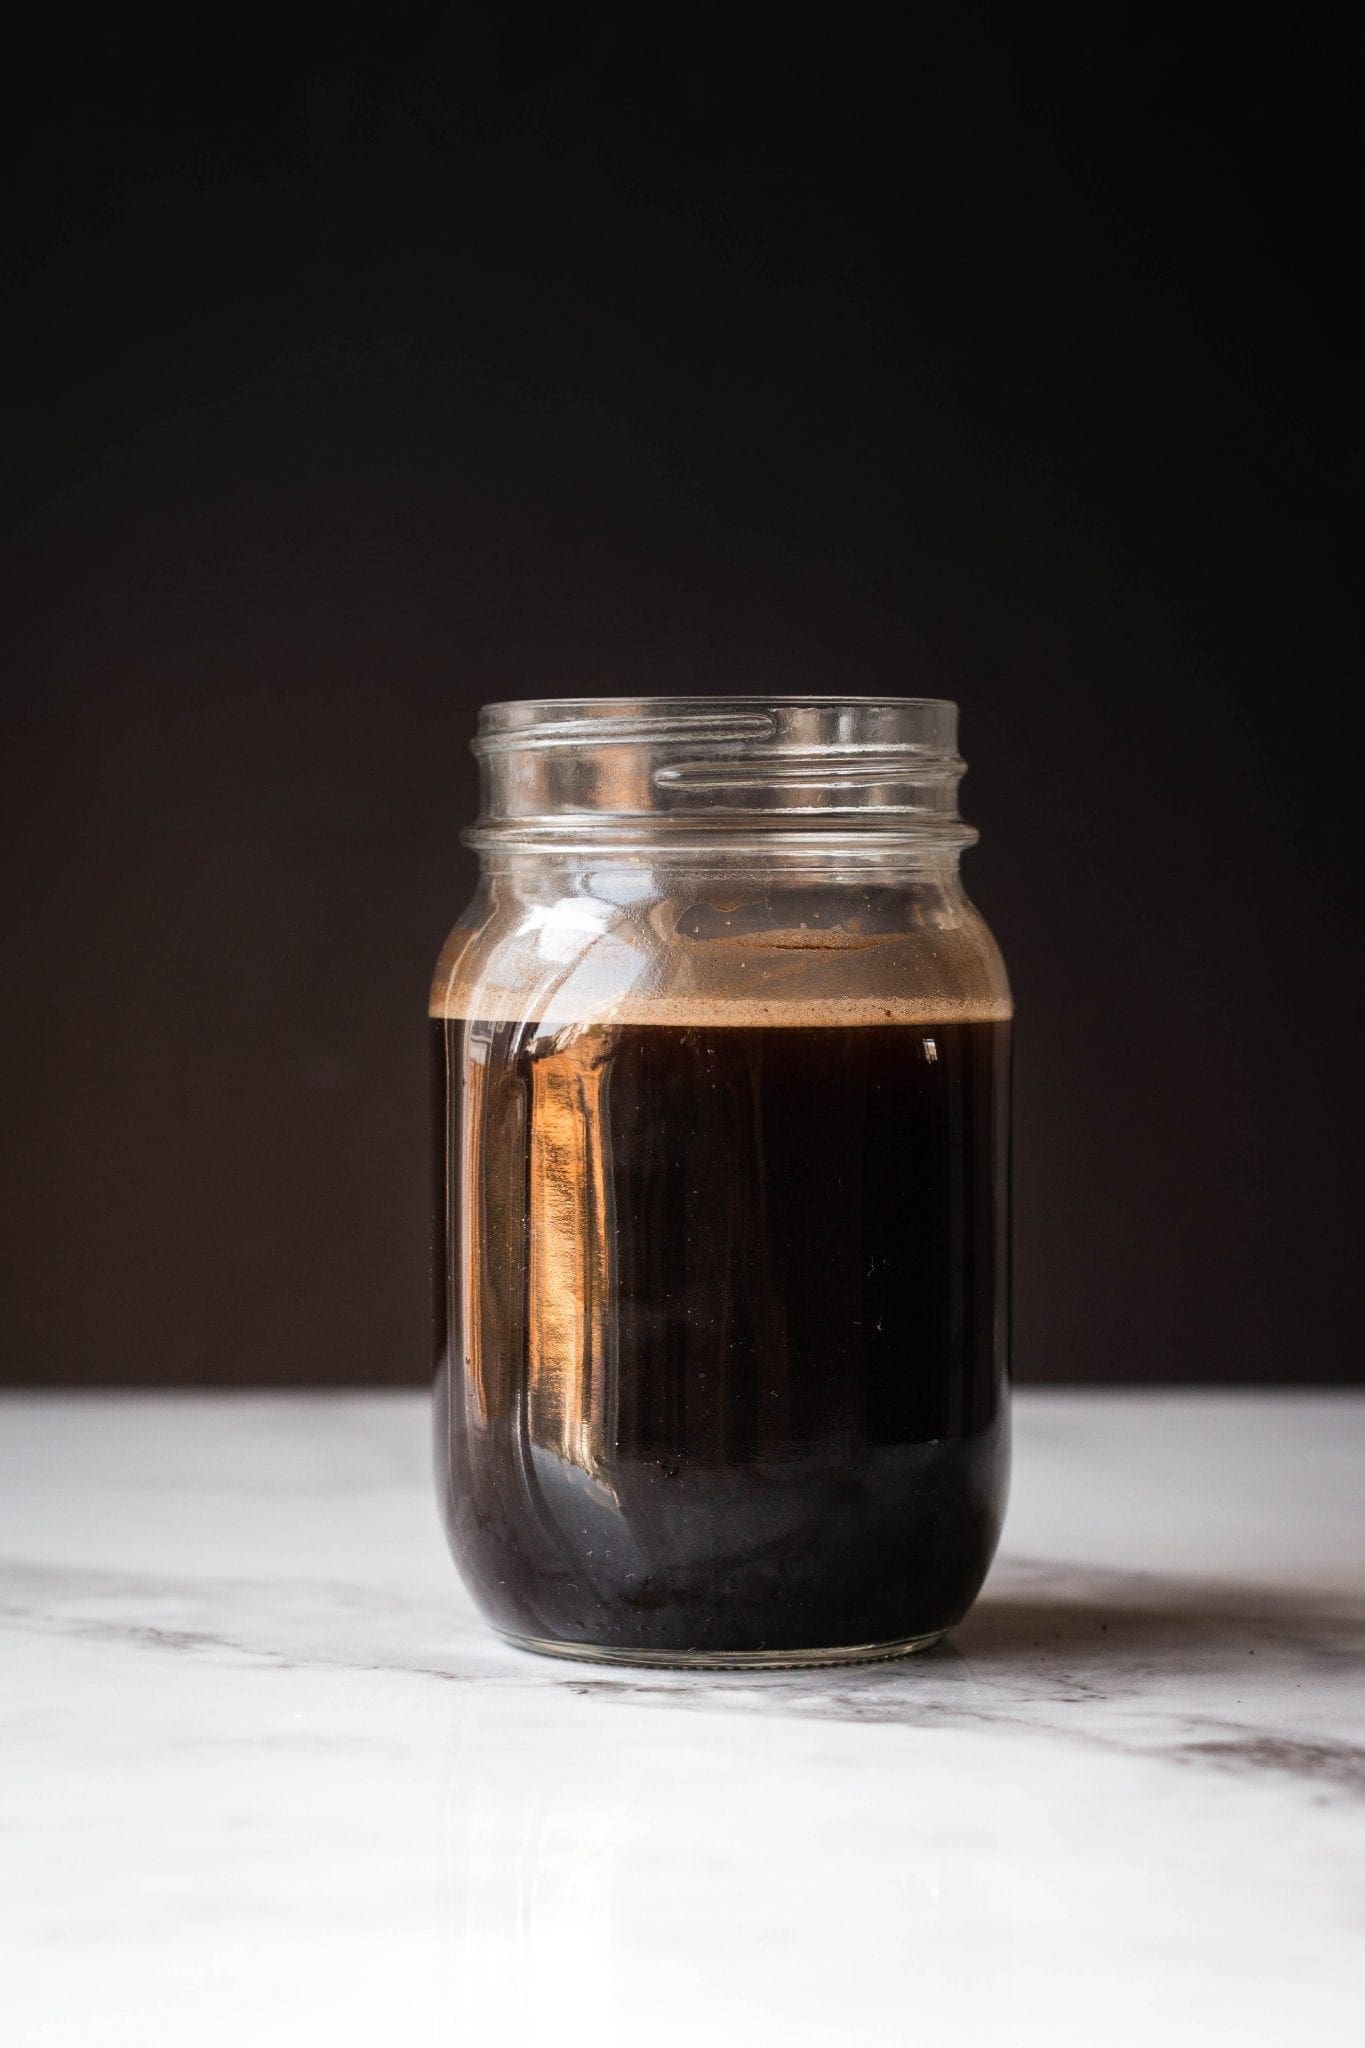 cold brew coffee in a jar